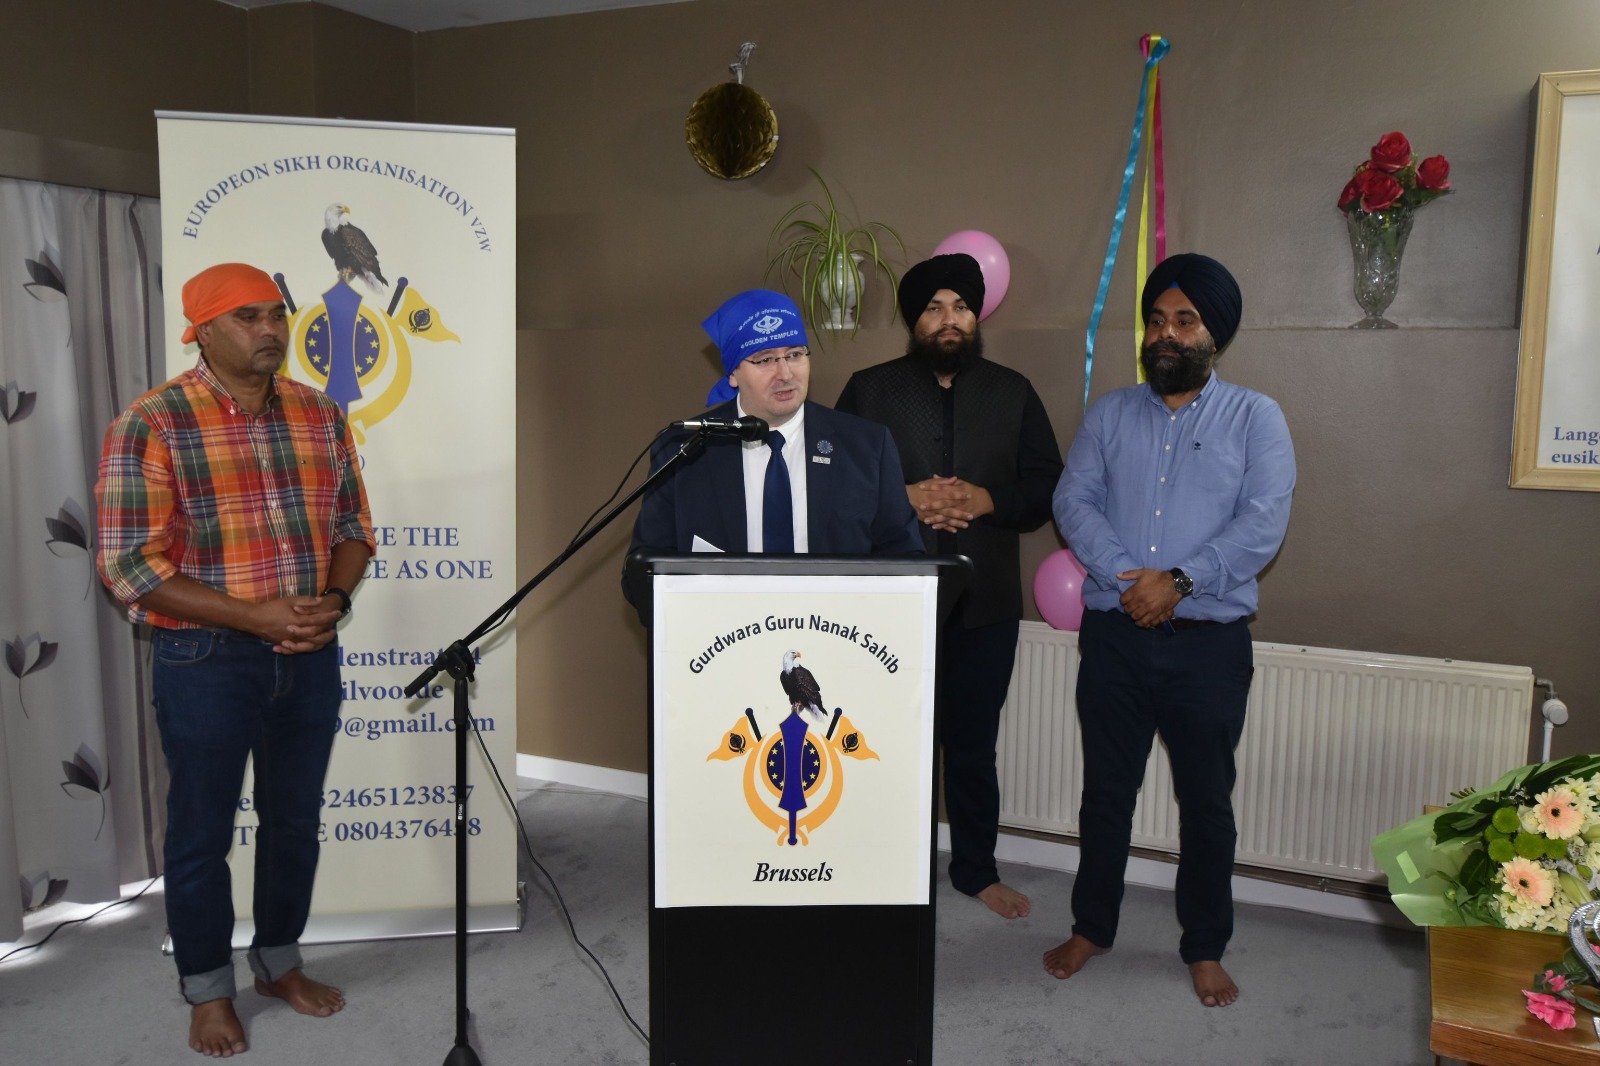 Fostering Unity and Celebrating Diversity, Scientology Representative Addresses European Sikh Organization Inauguration